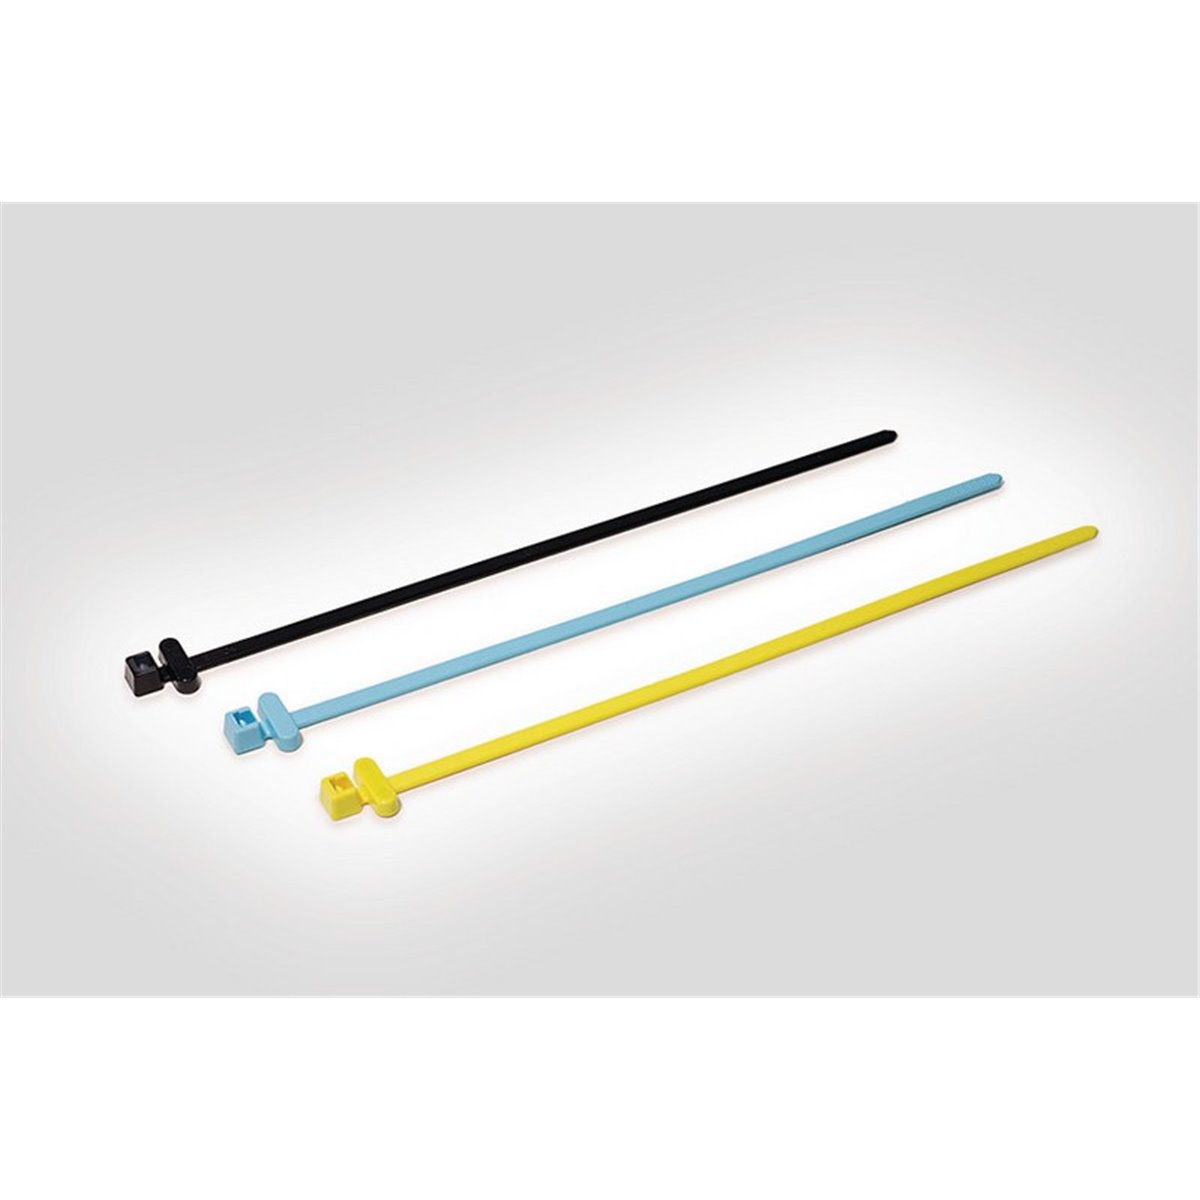 RFID cable tie, detectable 200x4.6mm, T50RFIDCHA-PA66-YE, polyamide 6.6, yellow, 100 pcs. HellermannTyton